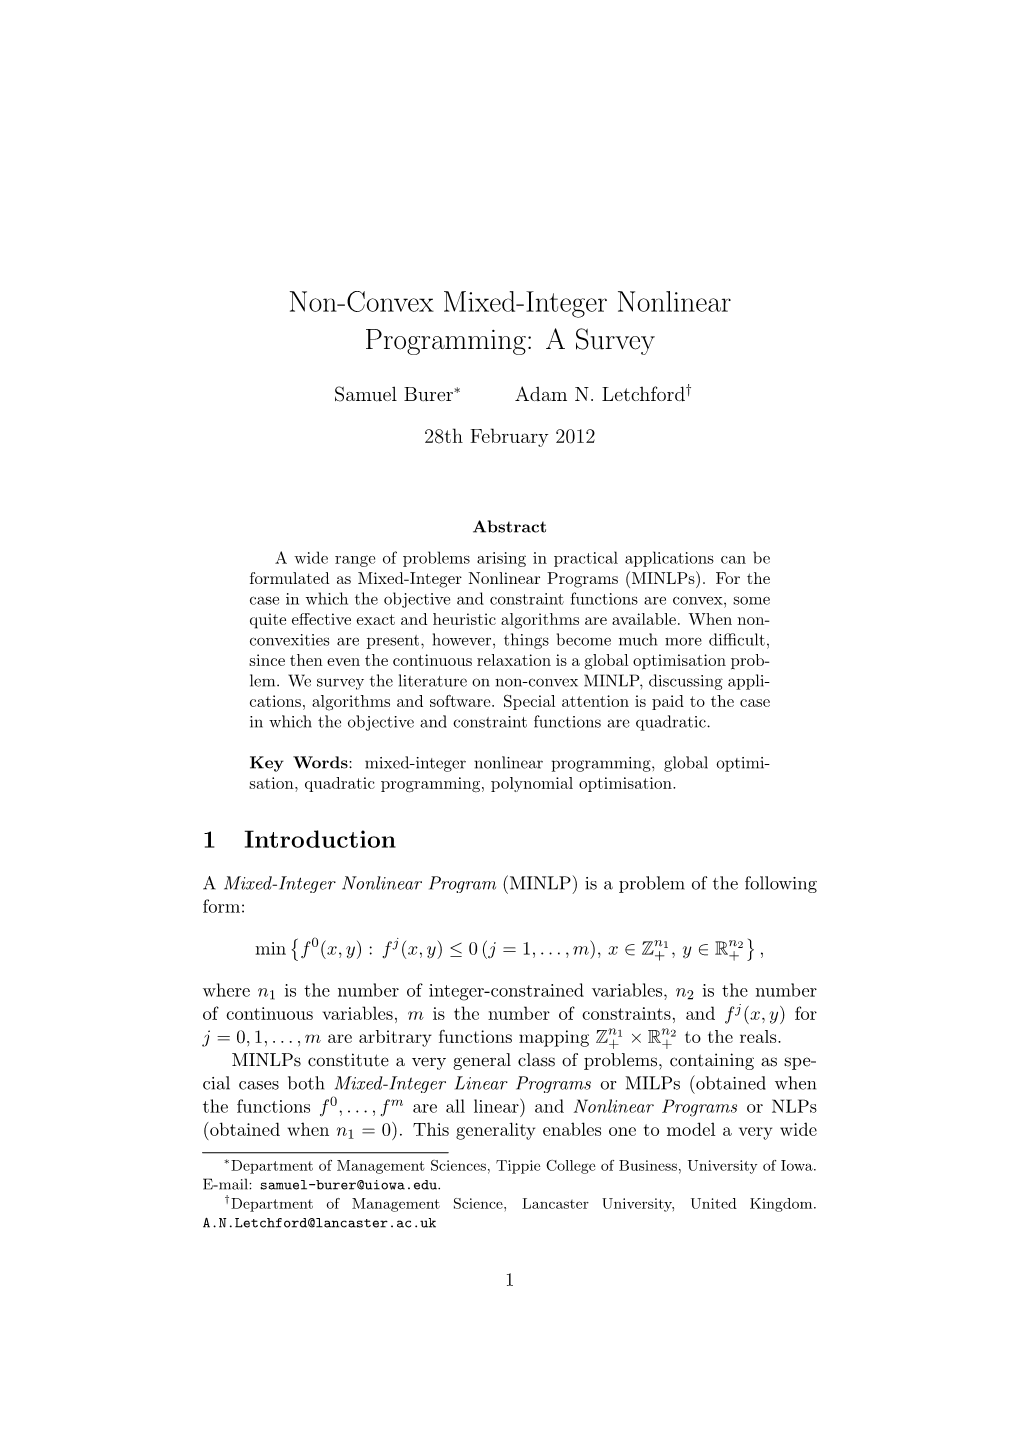 Non-Convex Mixed-Integer Nonlinear Programming: a Survey